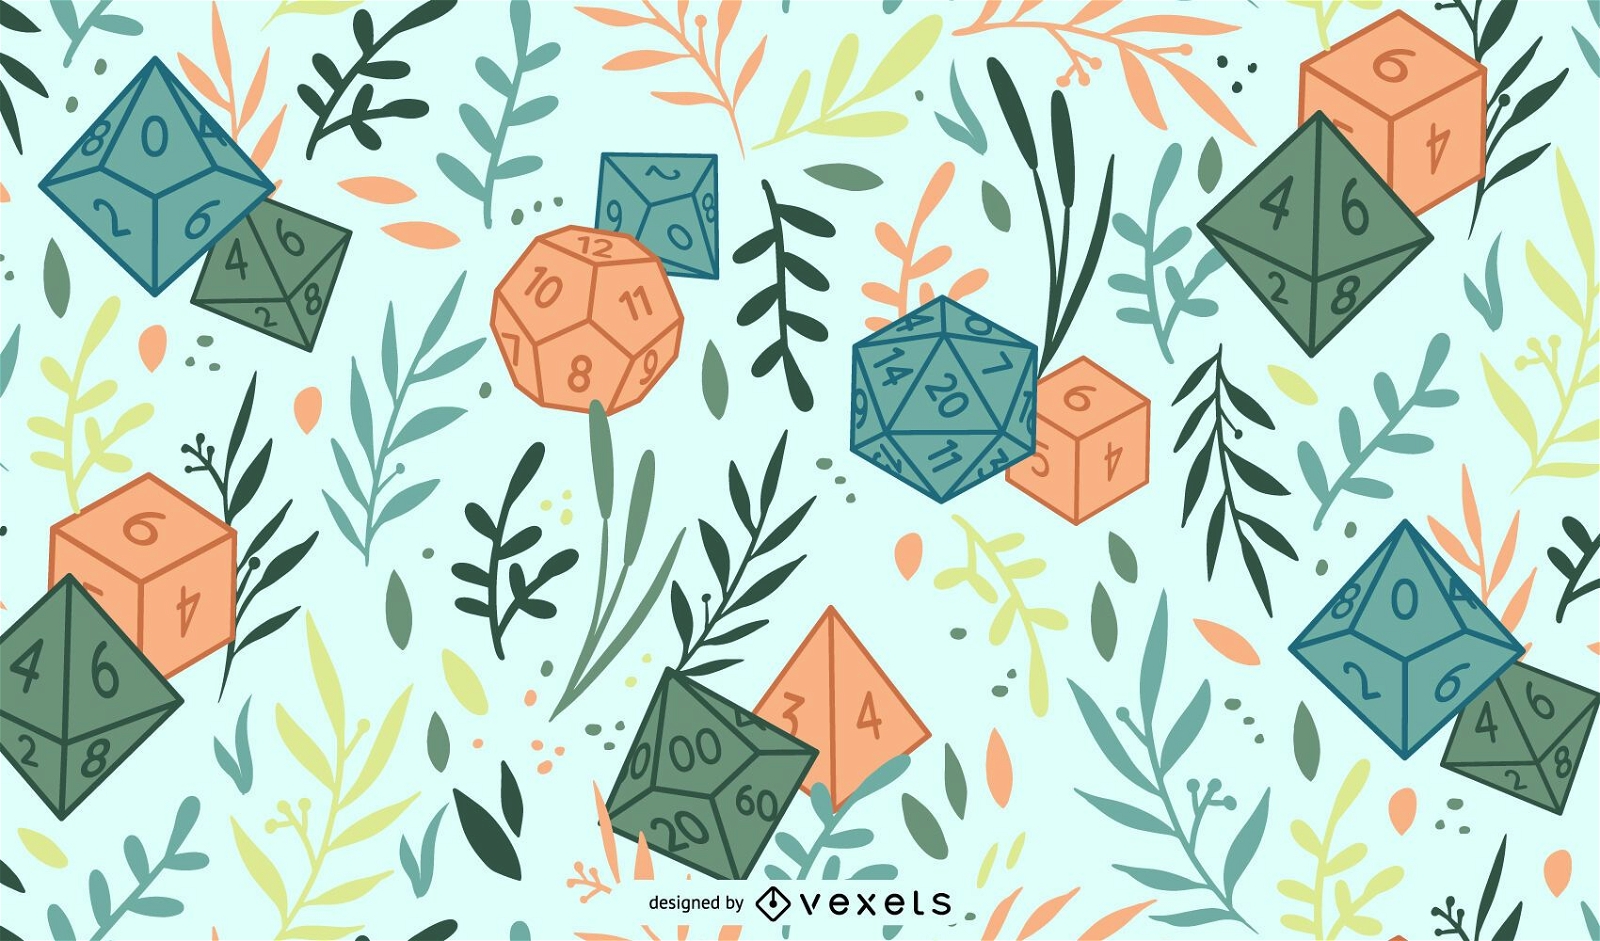 RPG polyhedral dice pattern design